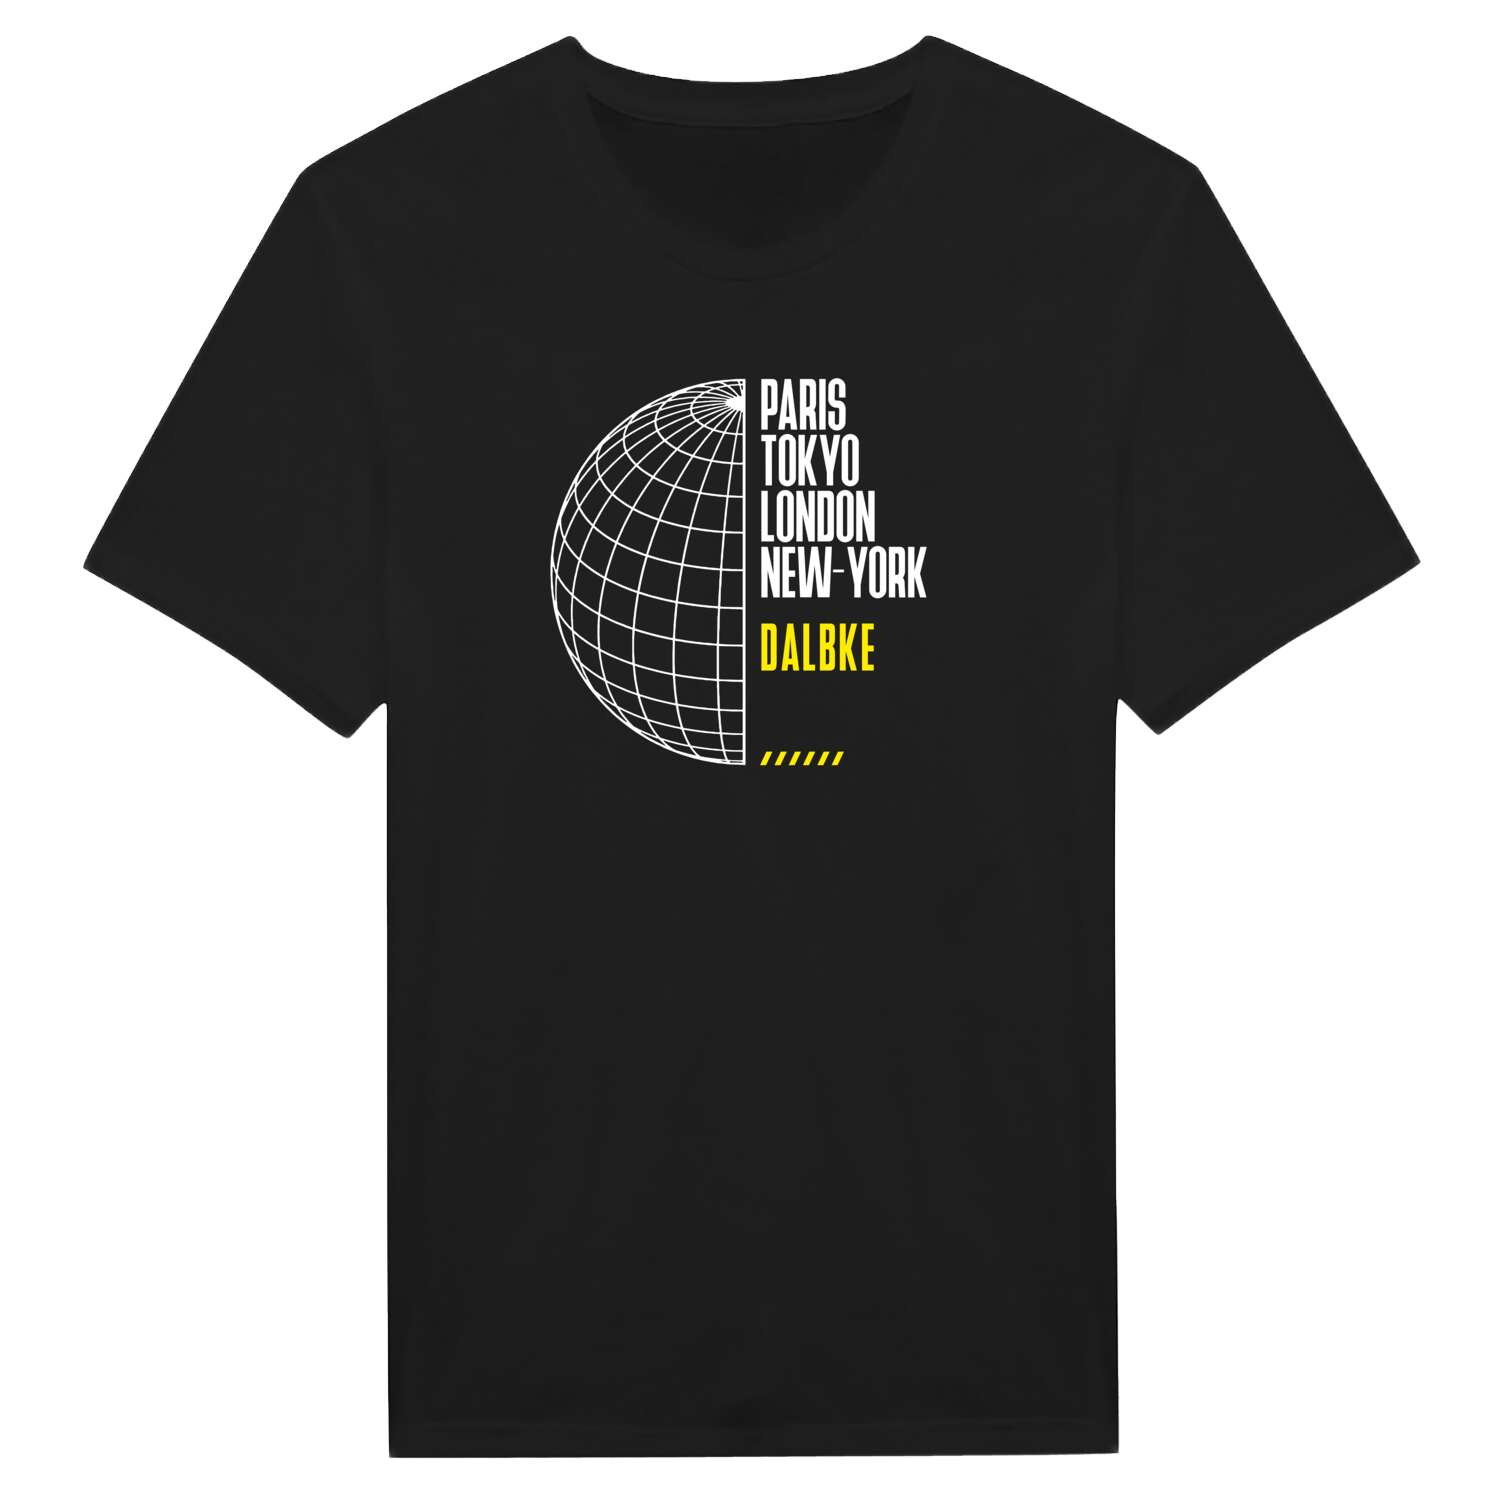 Dalbke T-Shirt »Paris Tokyo London«